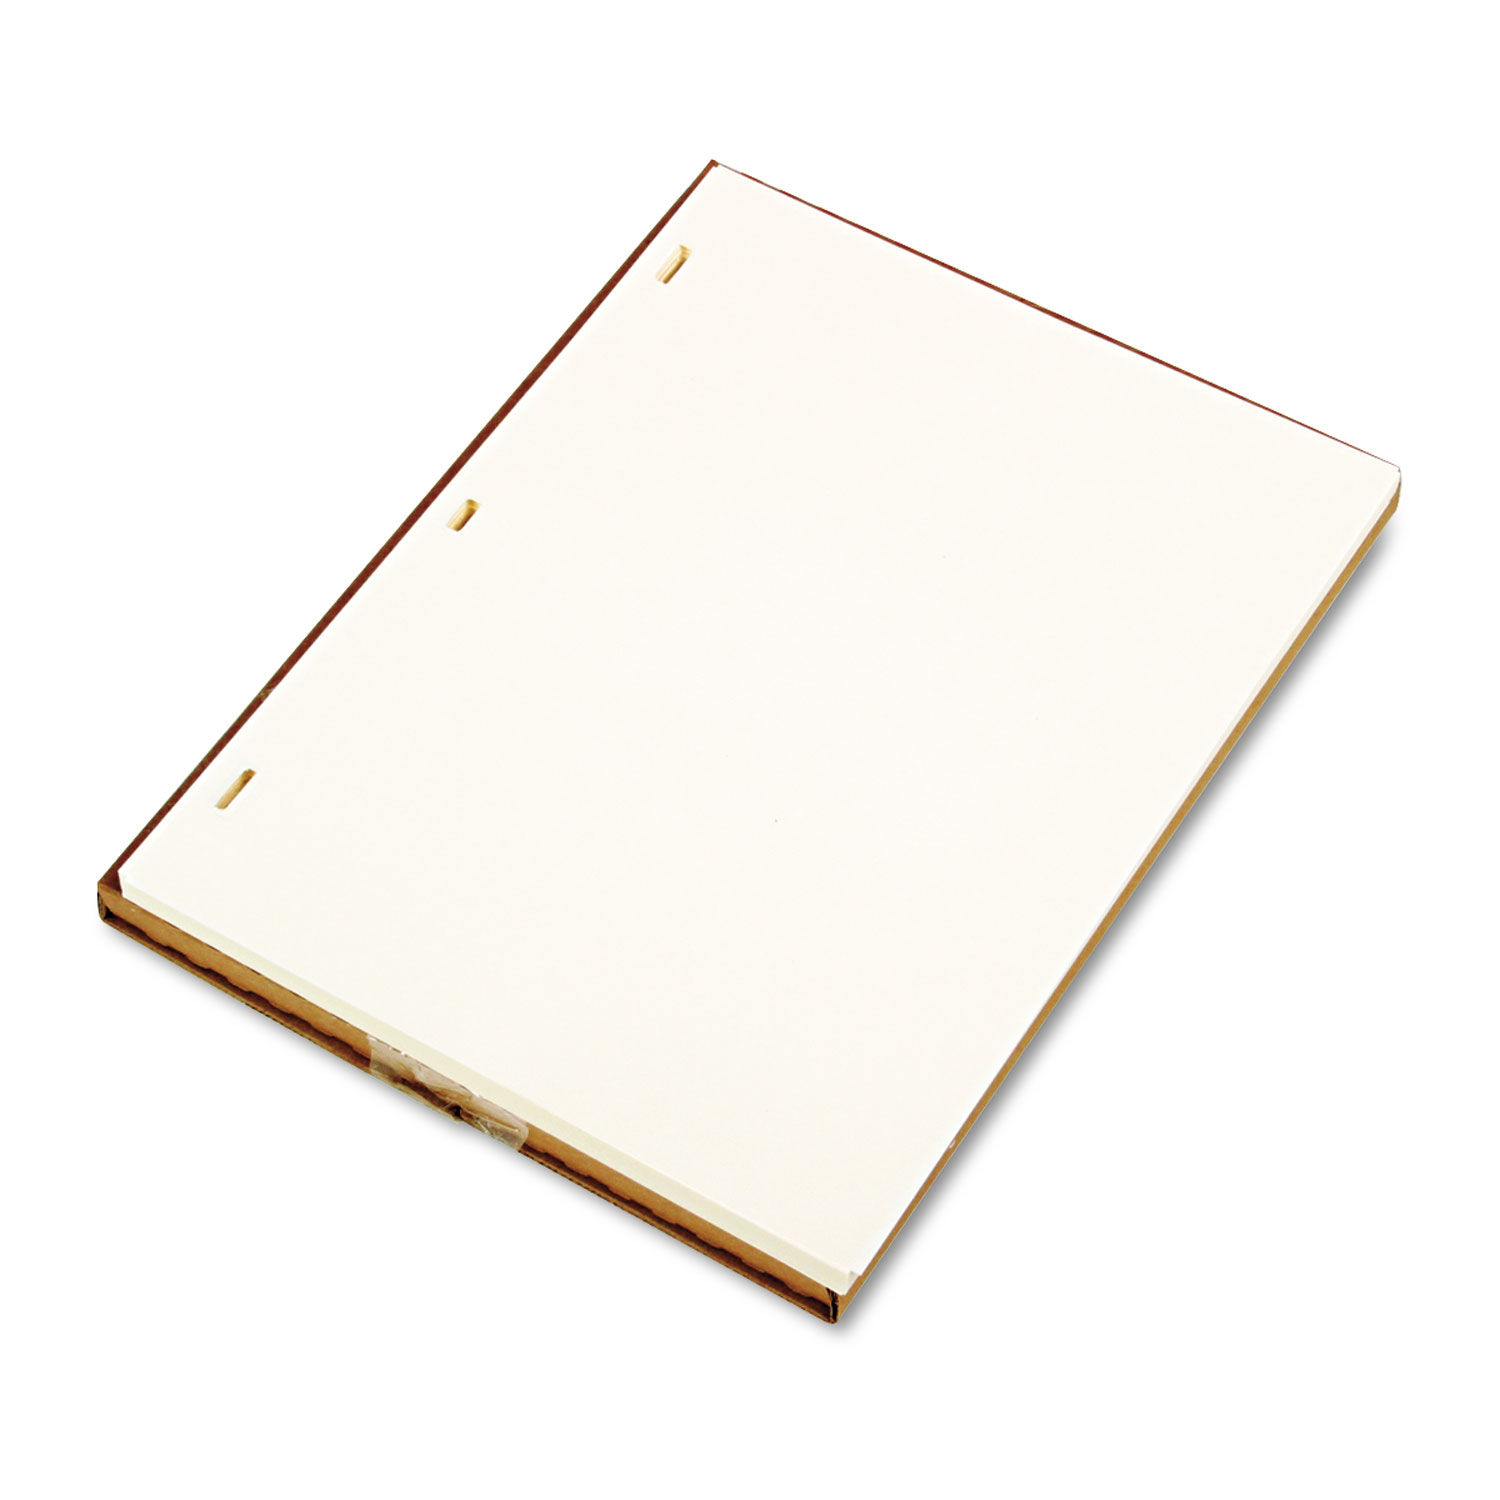 Looseleaf Minute Book Ledger Sheets, Ivory Linen, 11 x 8-1/2, 100 Sheet/Box